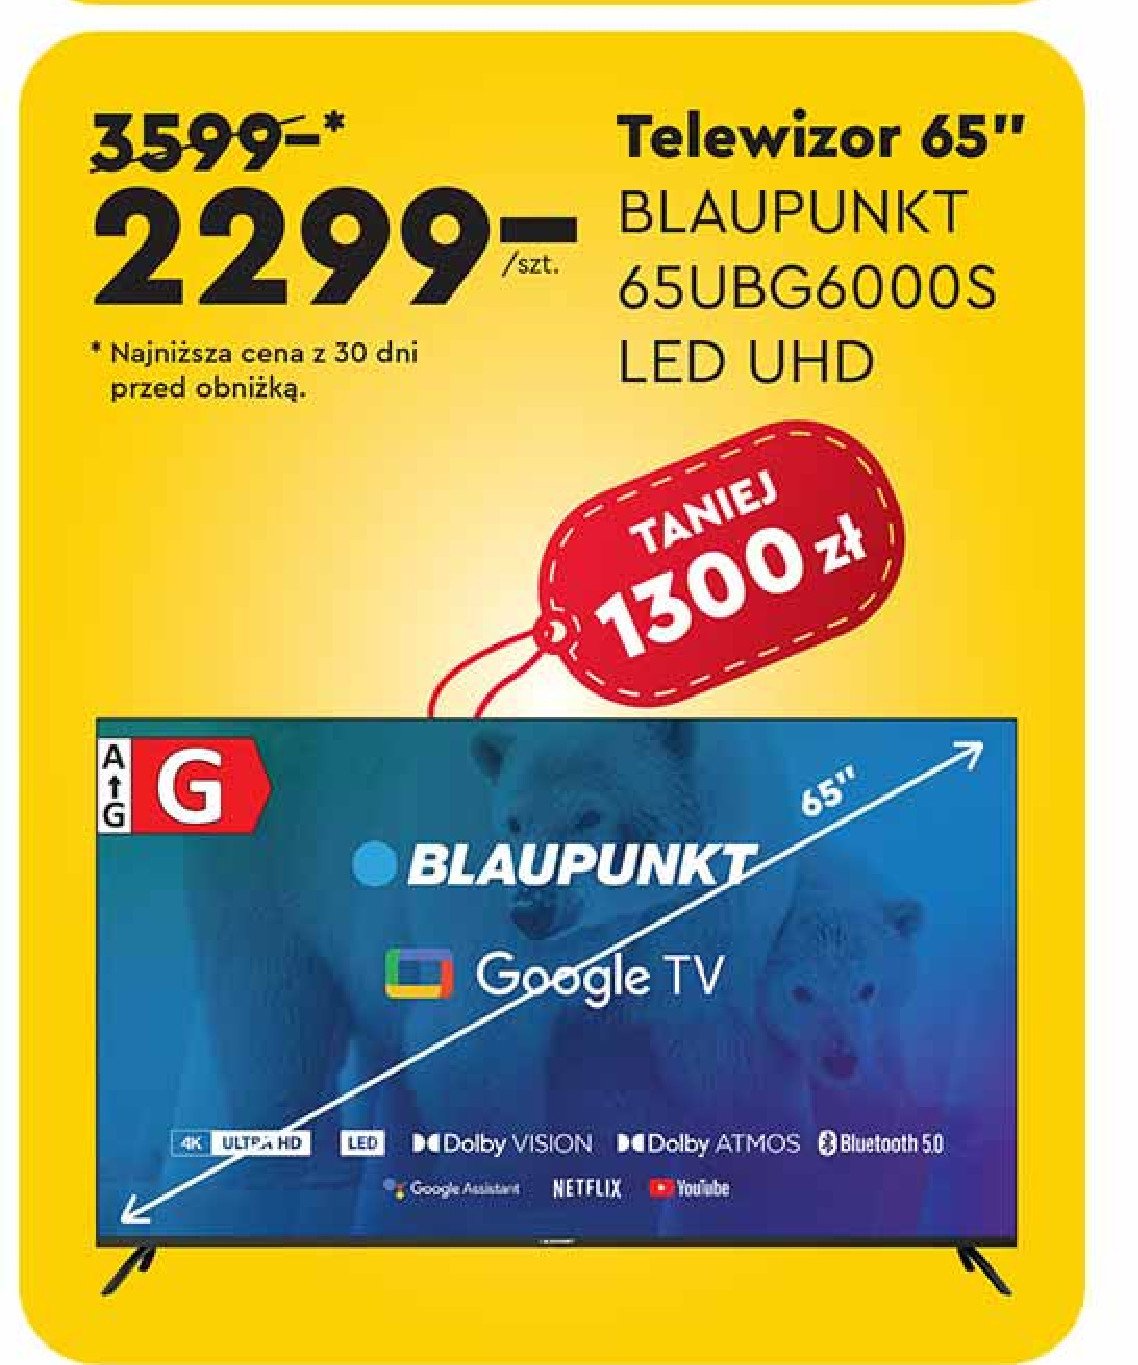 Telewizor 65" ubg6000s Blaupunkt promocja